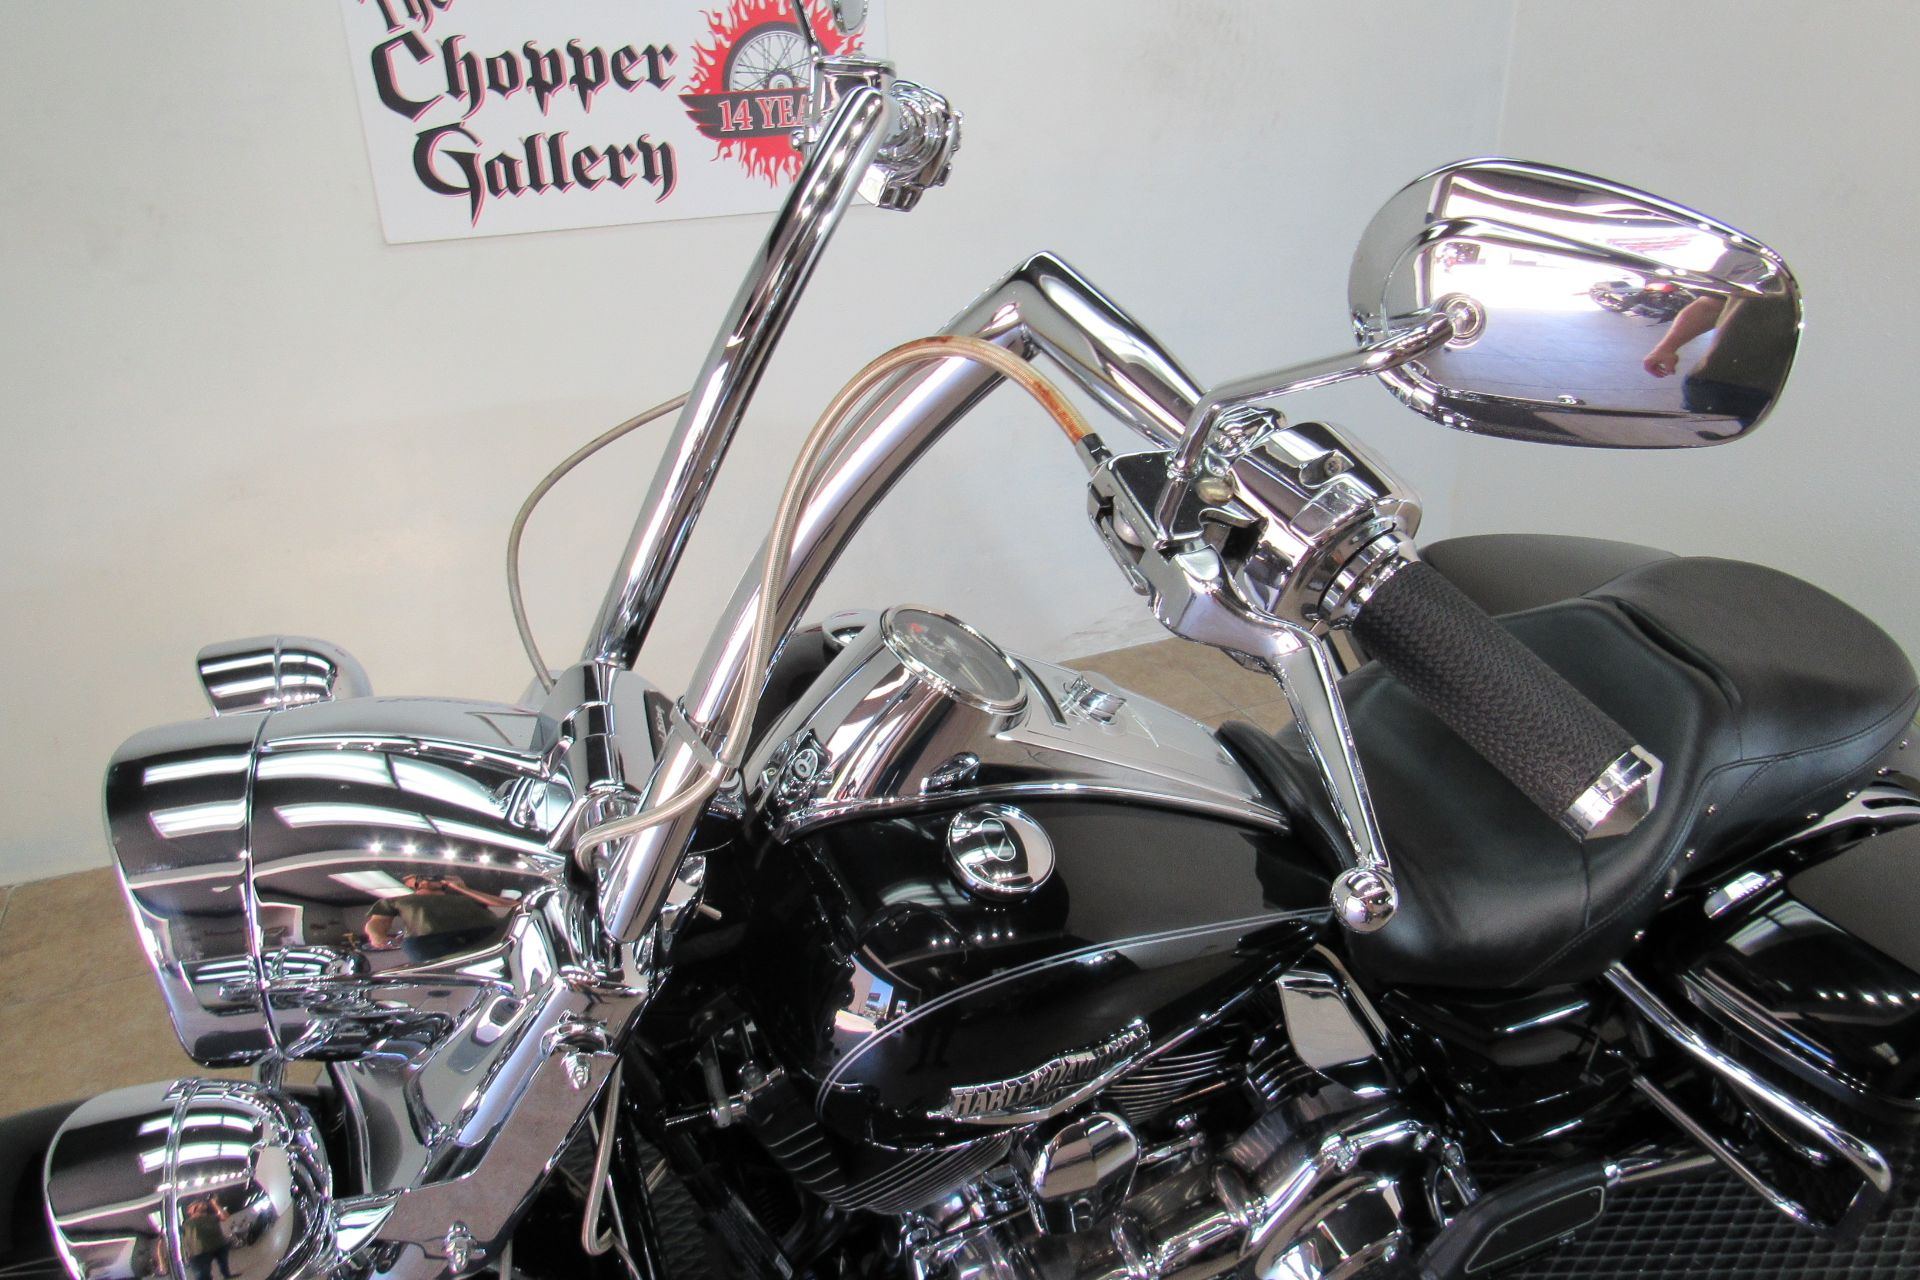 2015 Harley-Davidson Road King® in Temecula, California - Photo 37